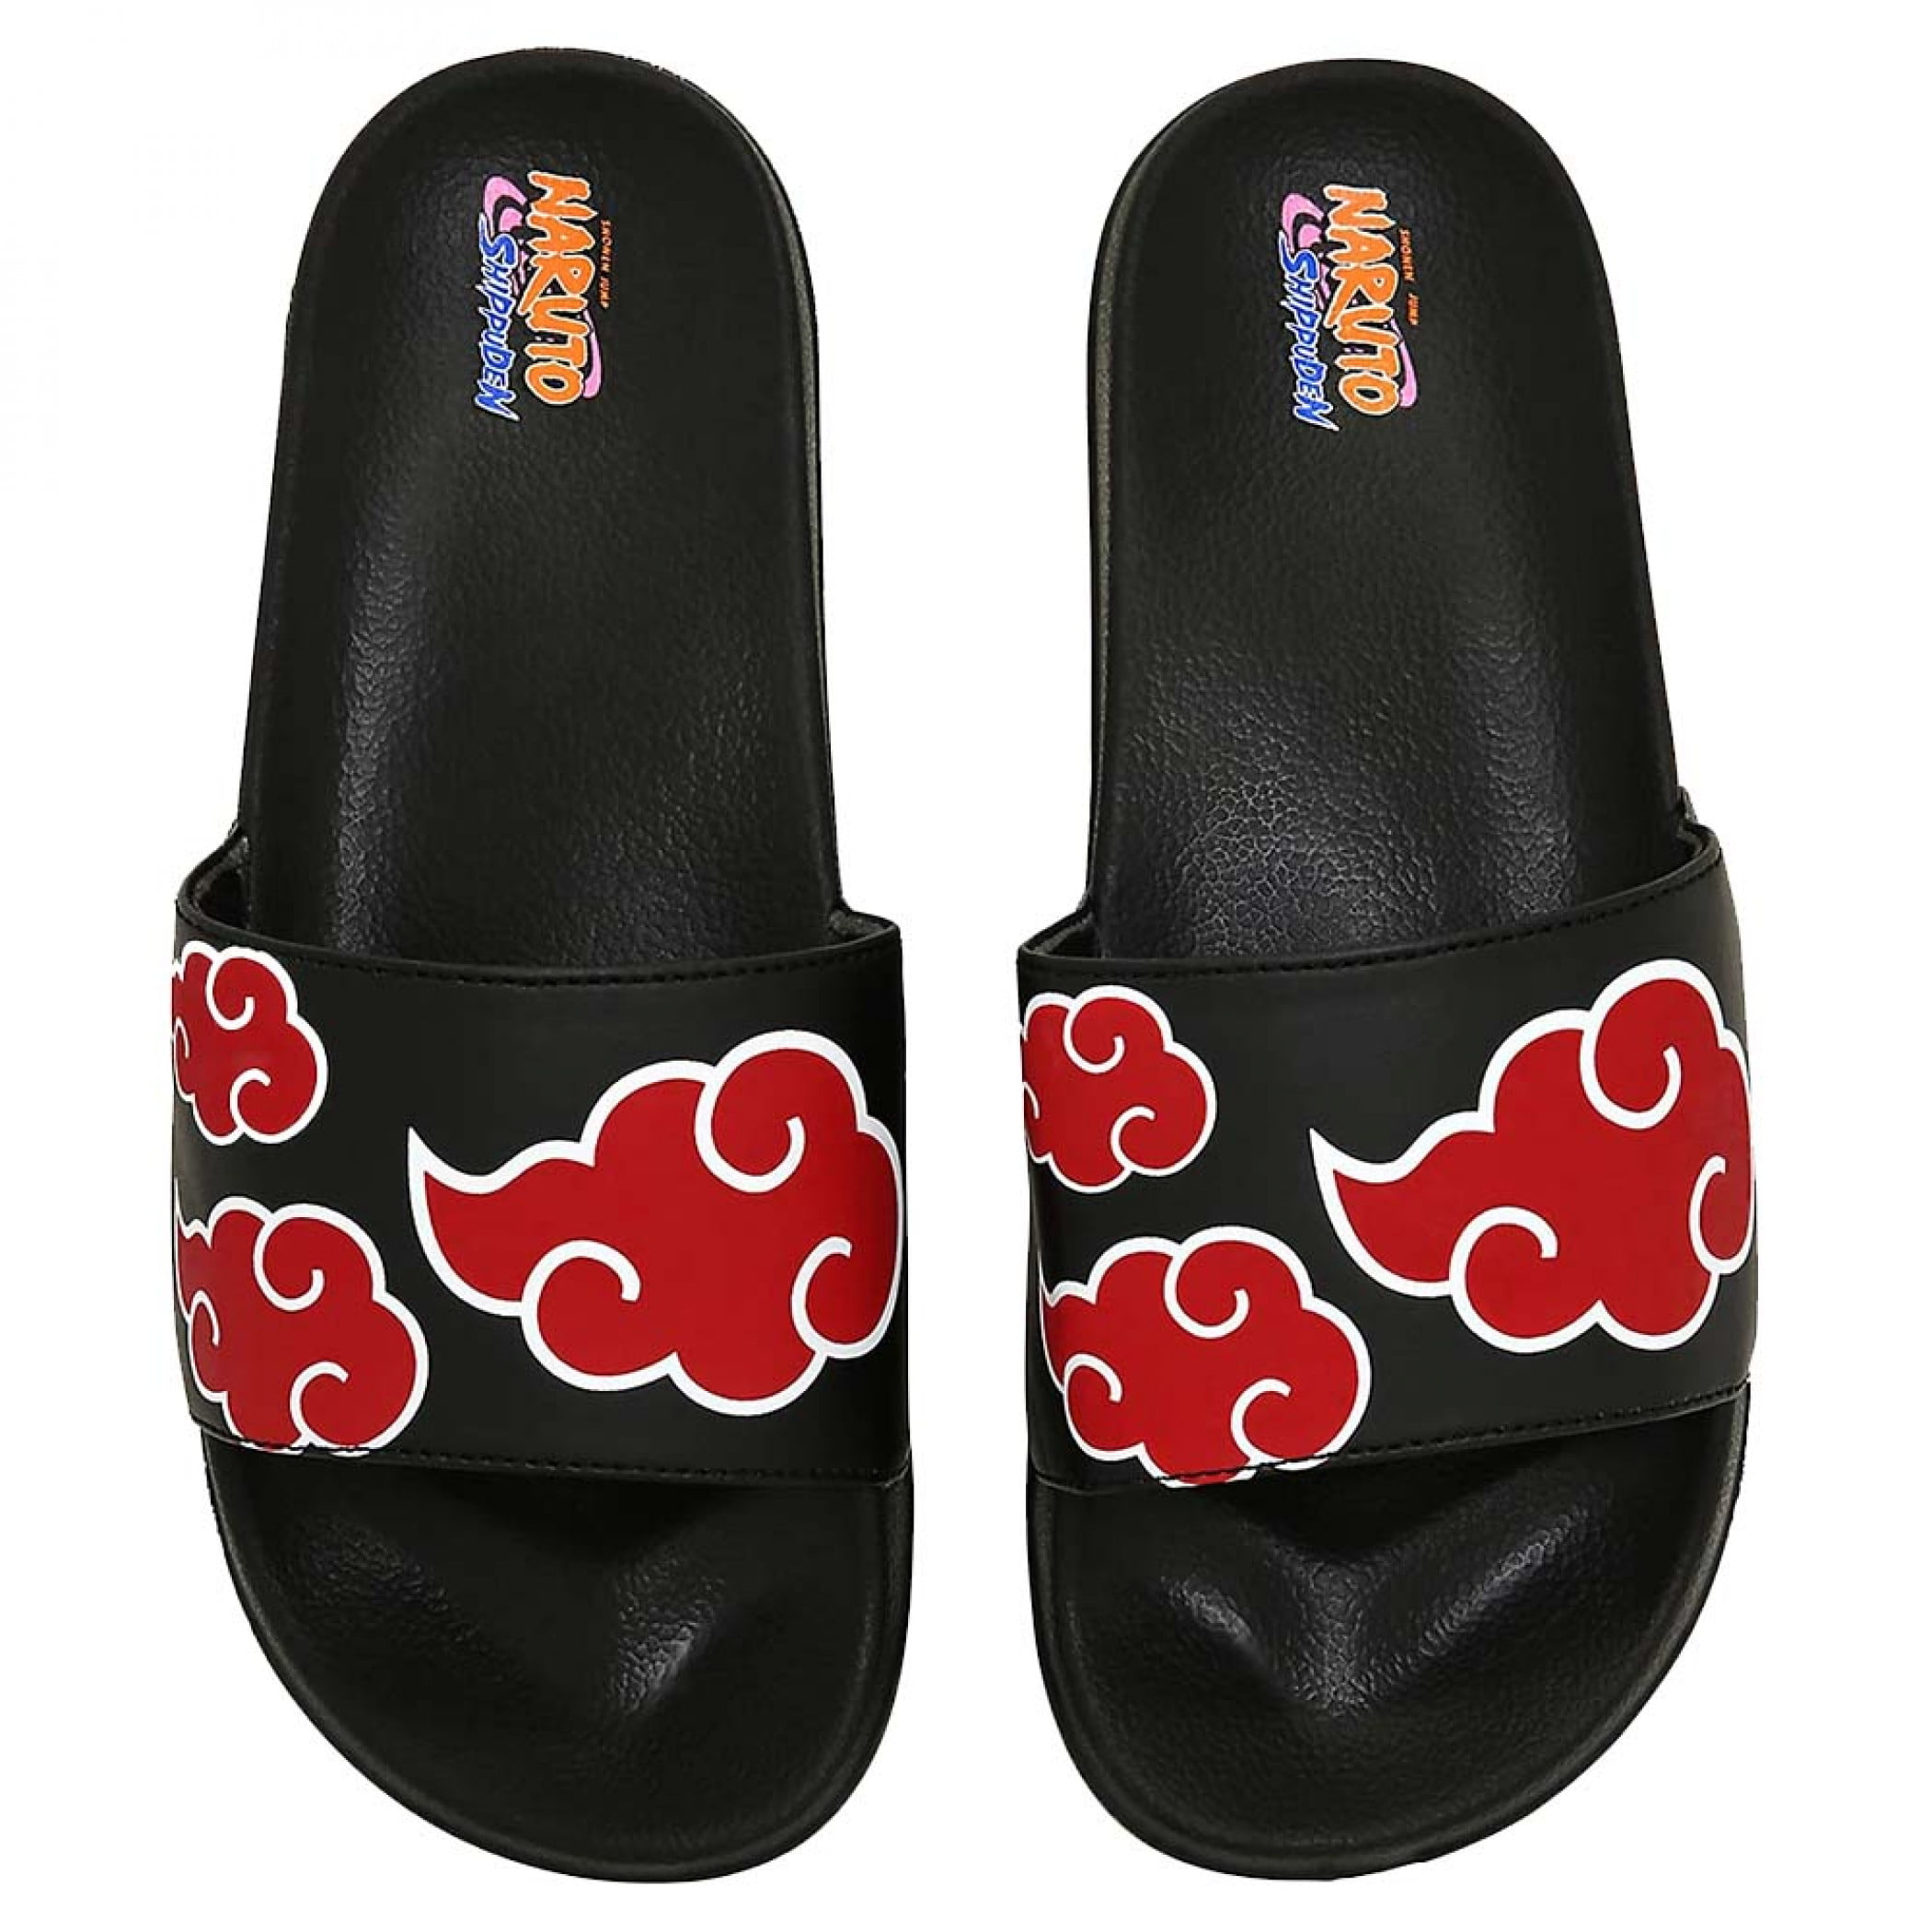 Naruto Logos Slides Sandals-Large - Walmart.com